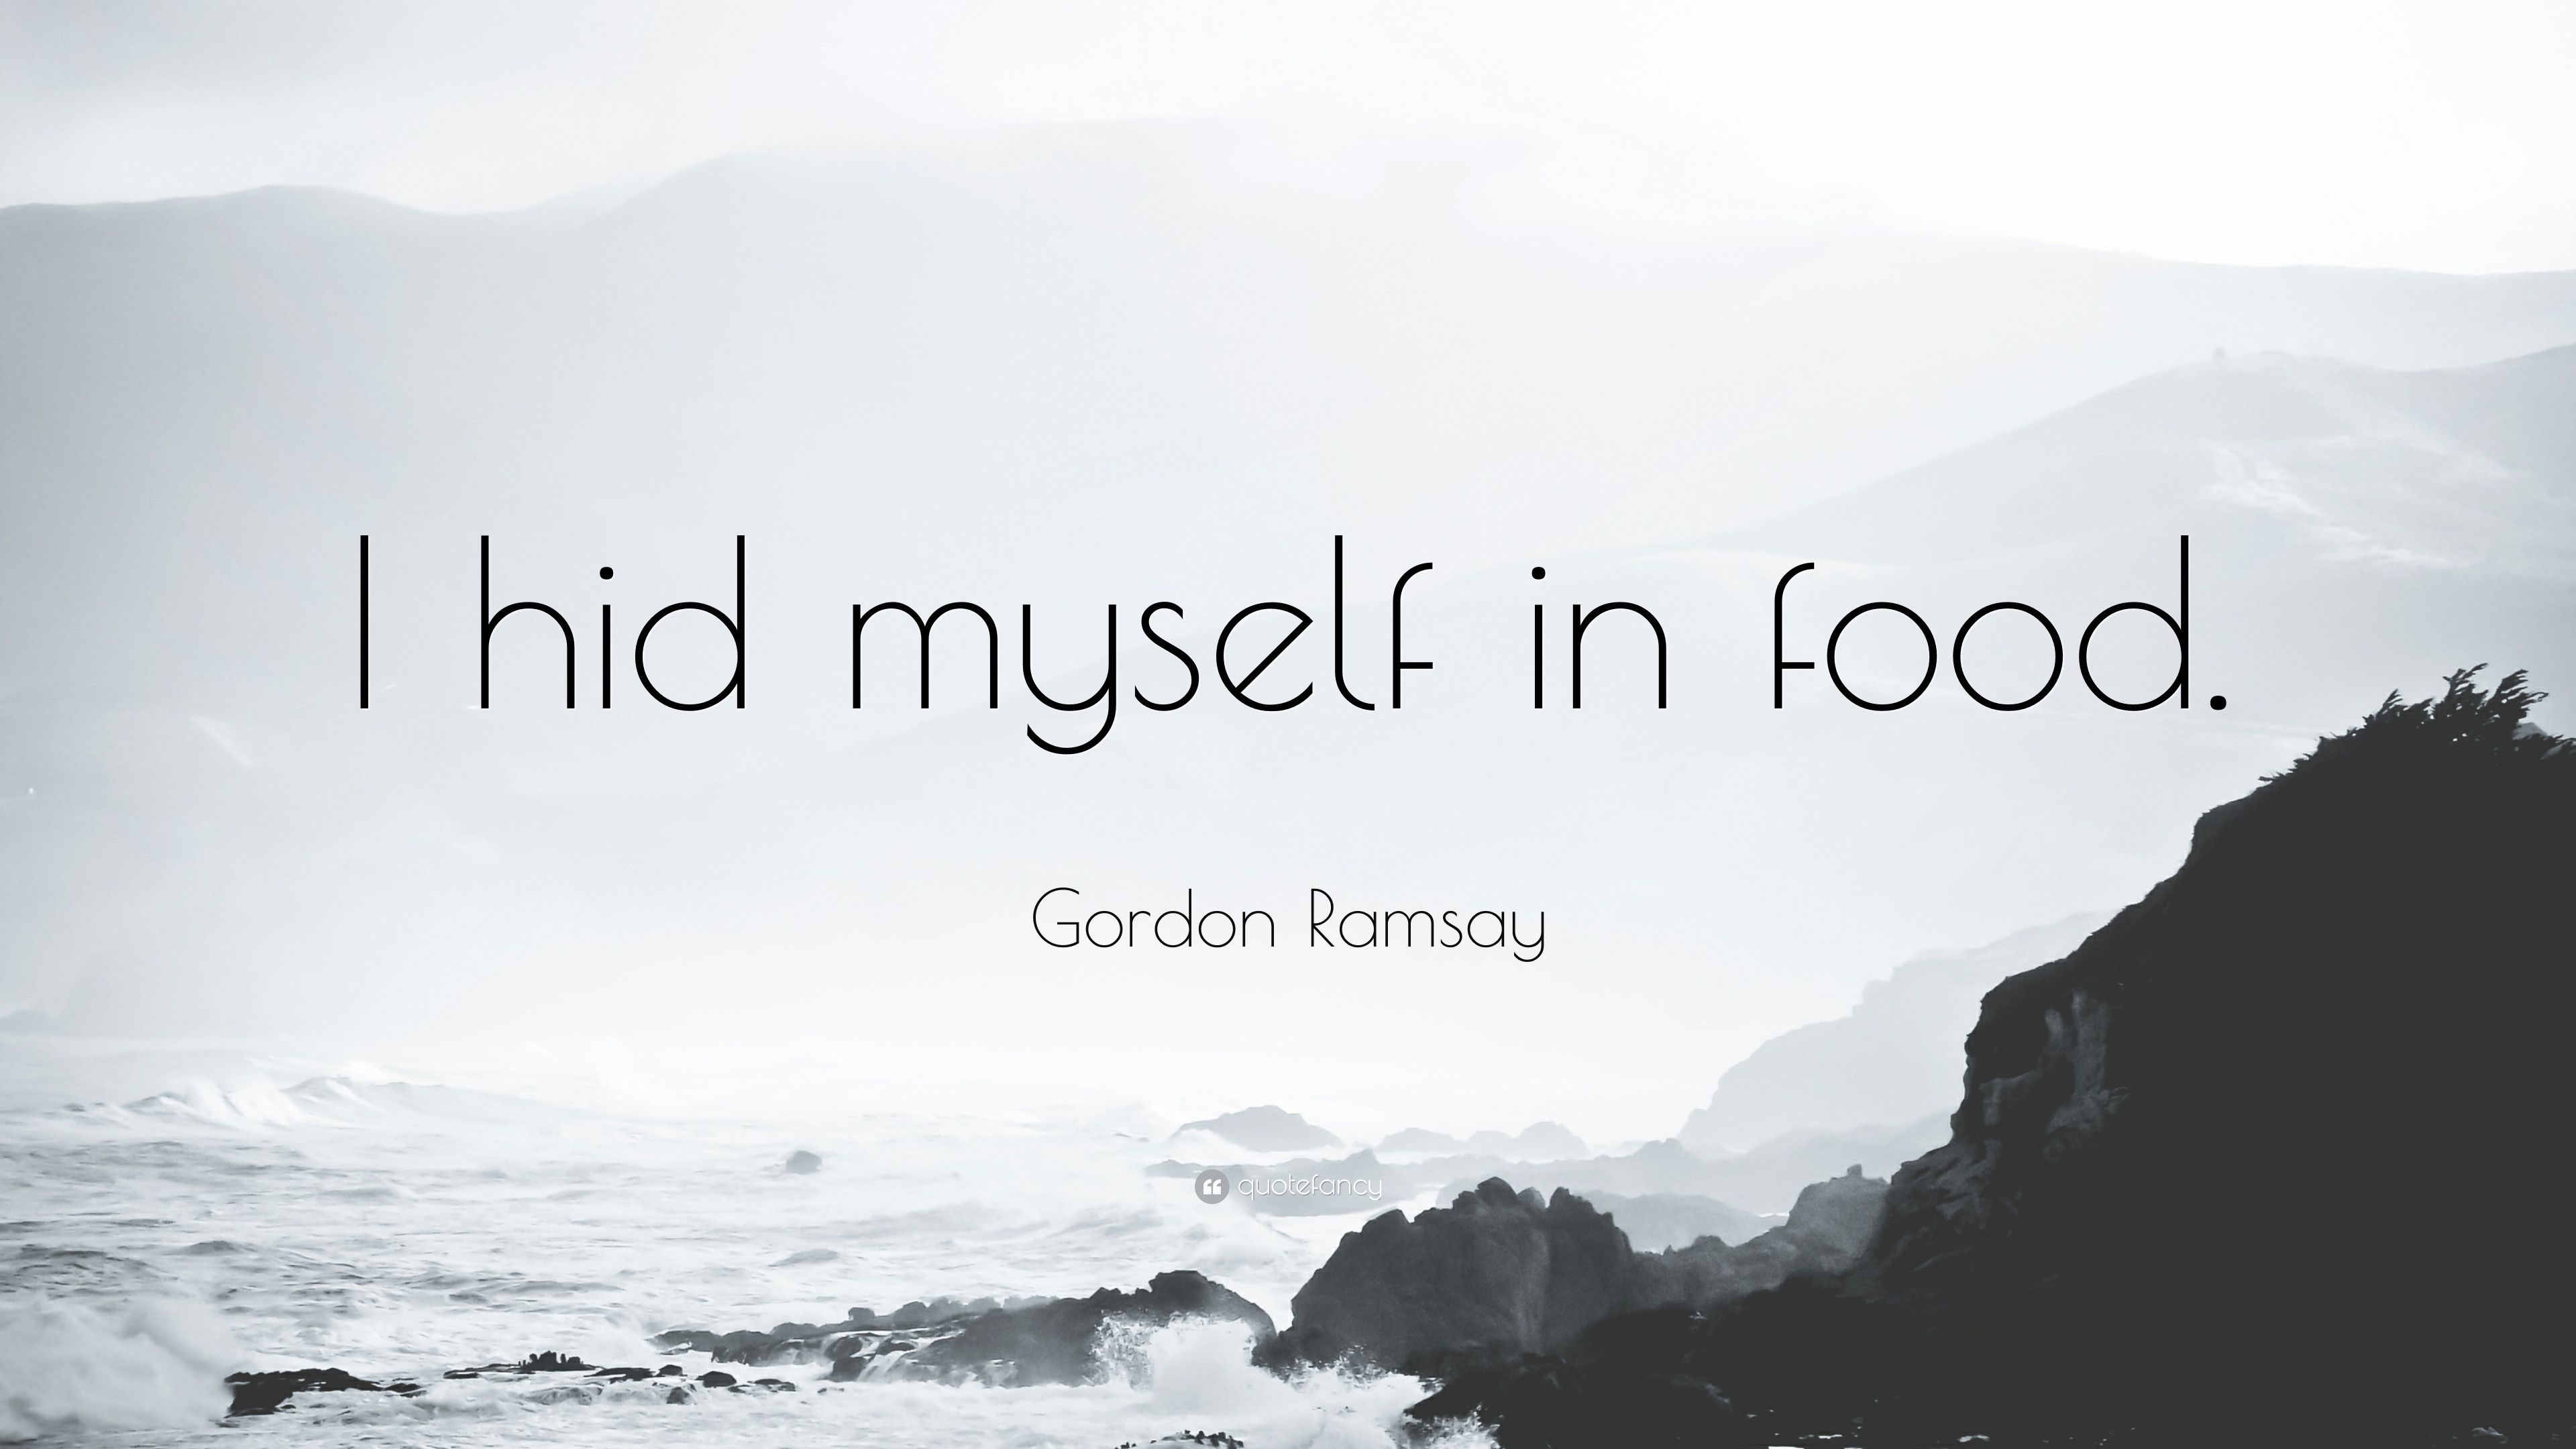 Gordon Ramsay Quote: “I hid myself in food.” (7 wallpaper)